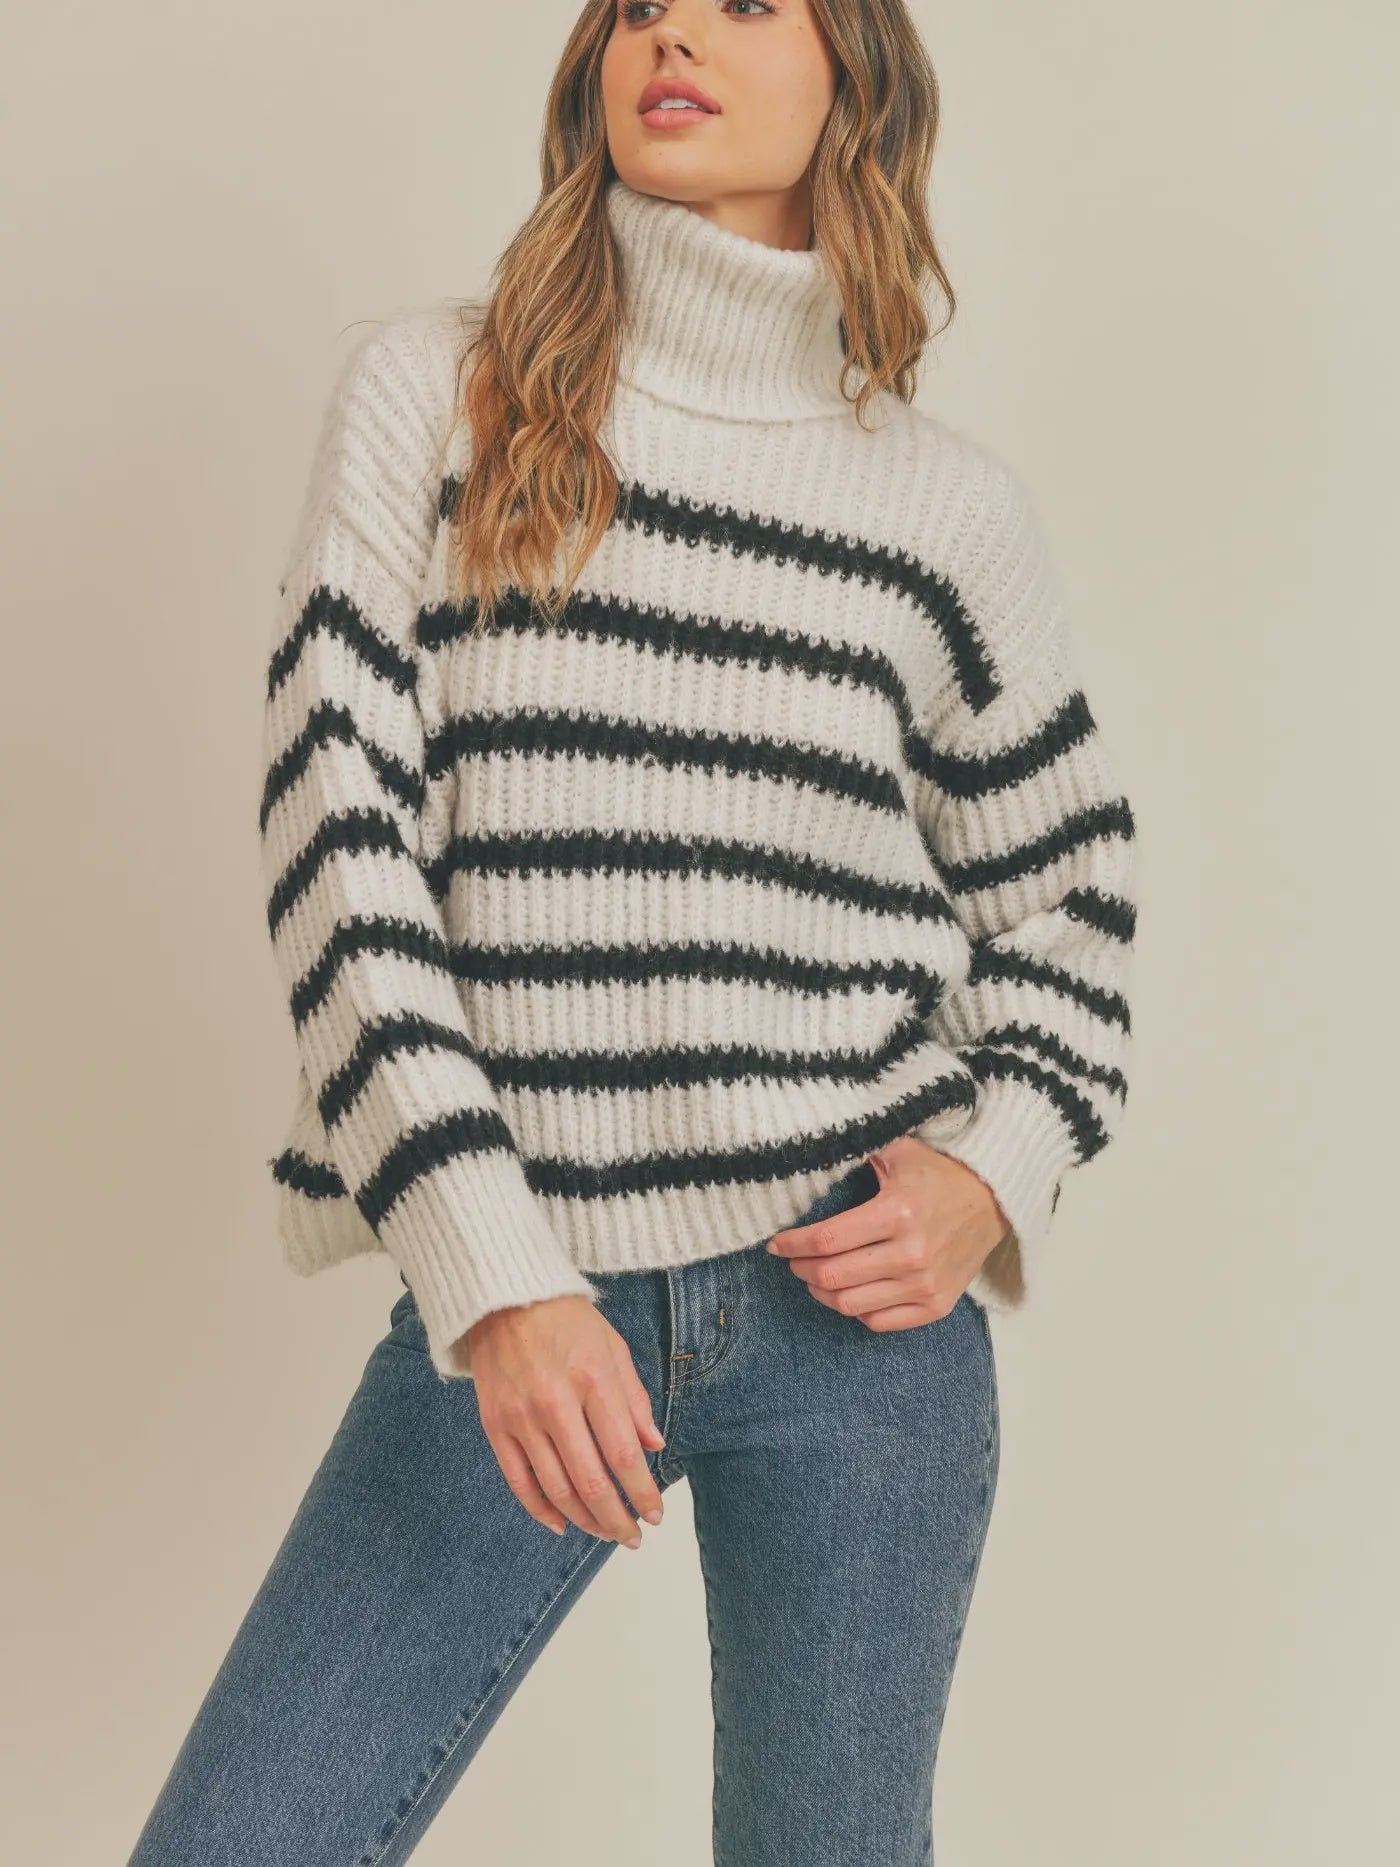 The Aki Turtleneck Sweater